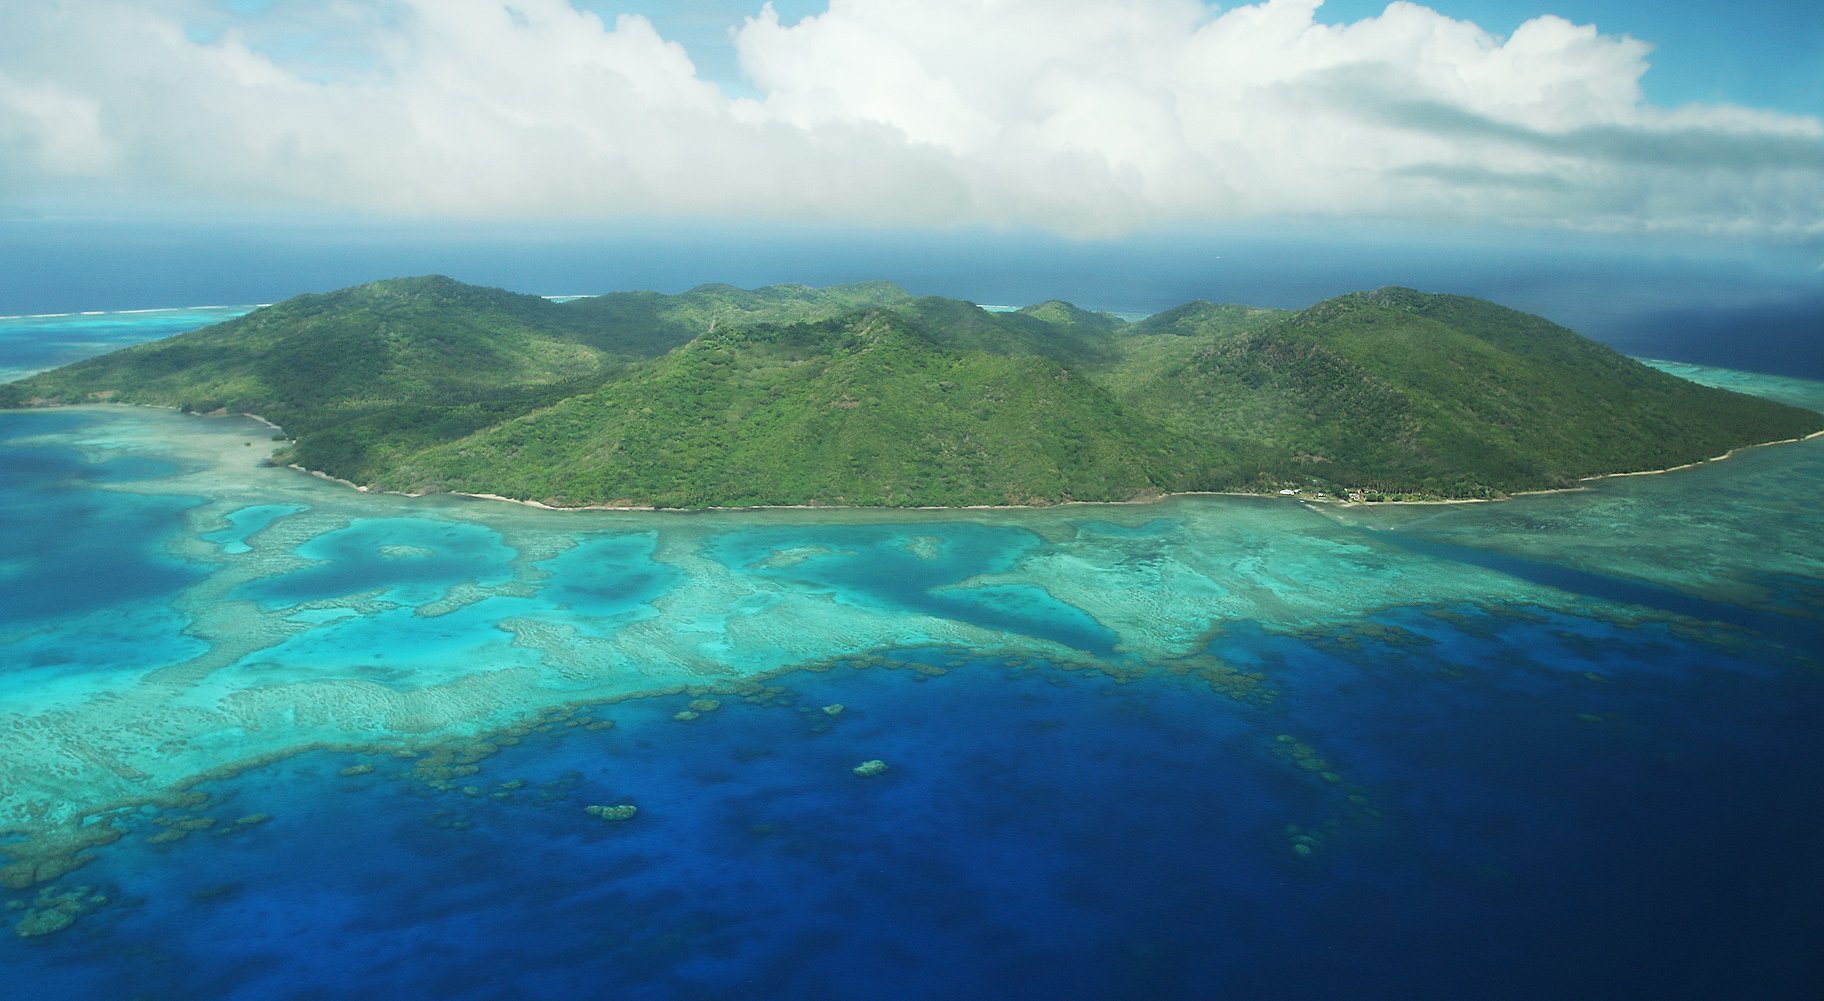 Млн тихого океана. Острова Лау, Фиджи. Фиджи Атолл. Каролинские острова Атолл. Коморские острова (архипелаг).